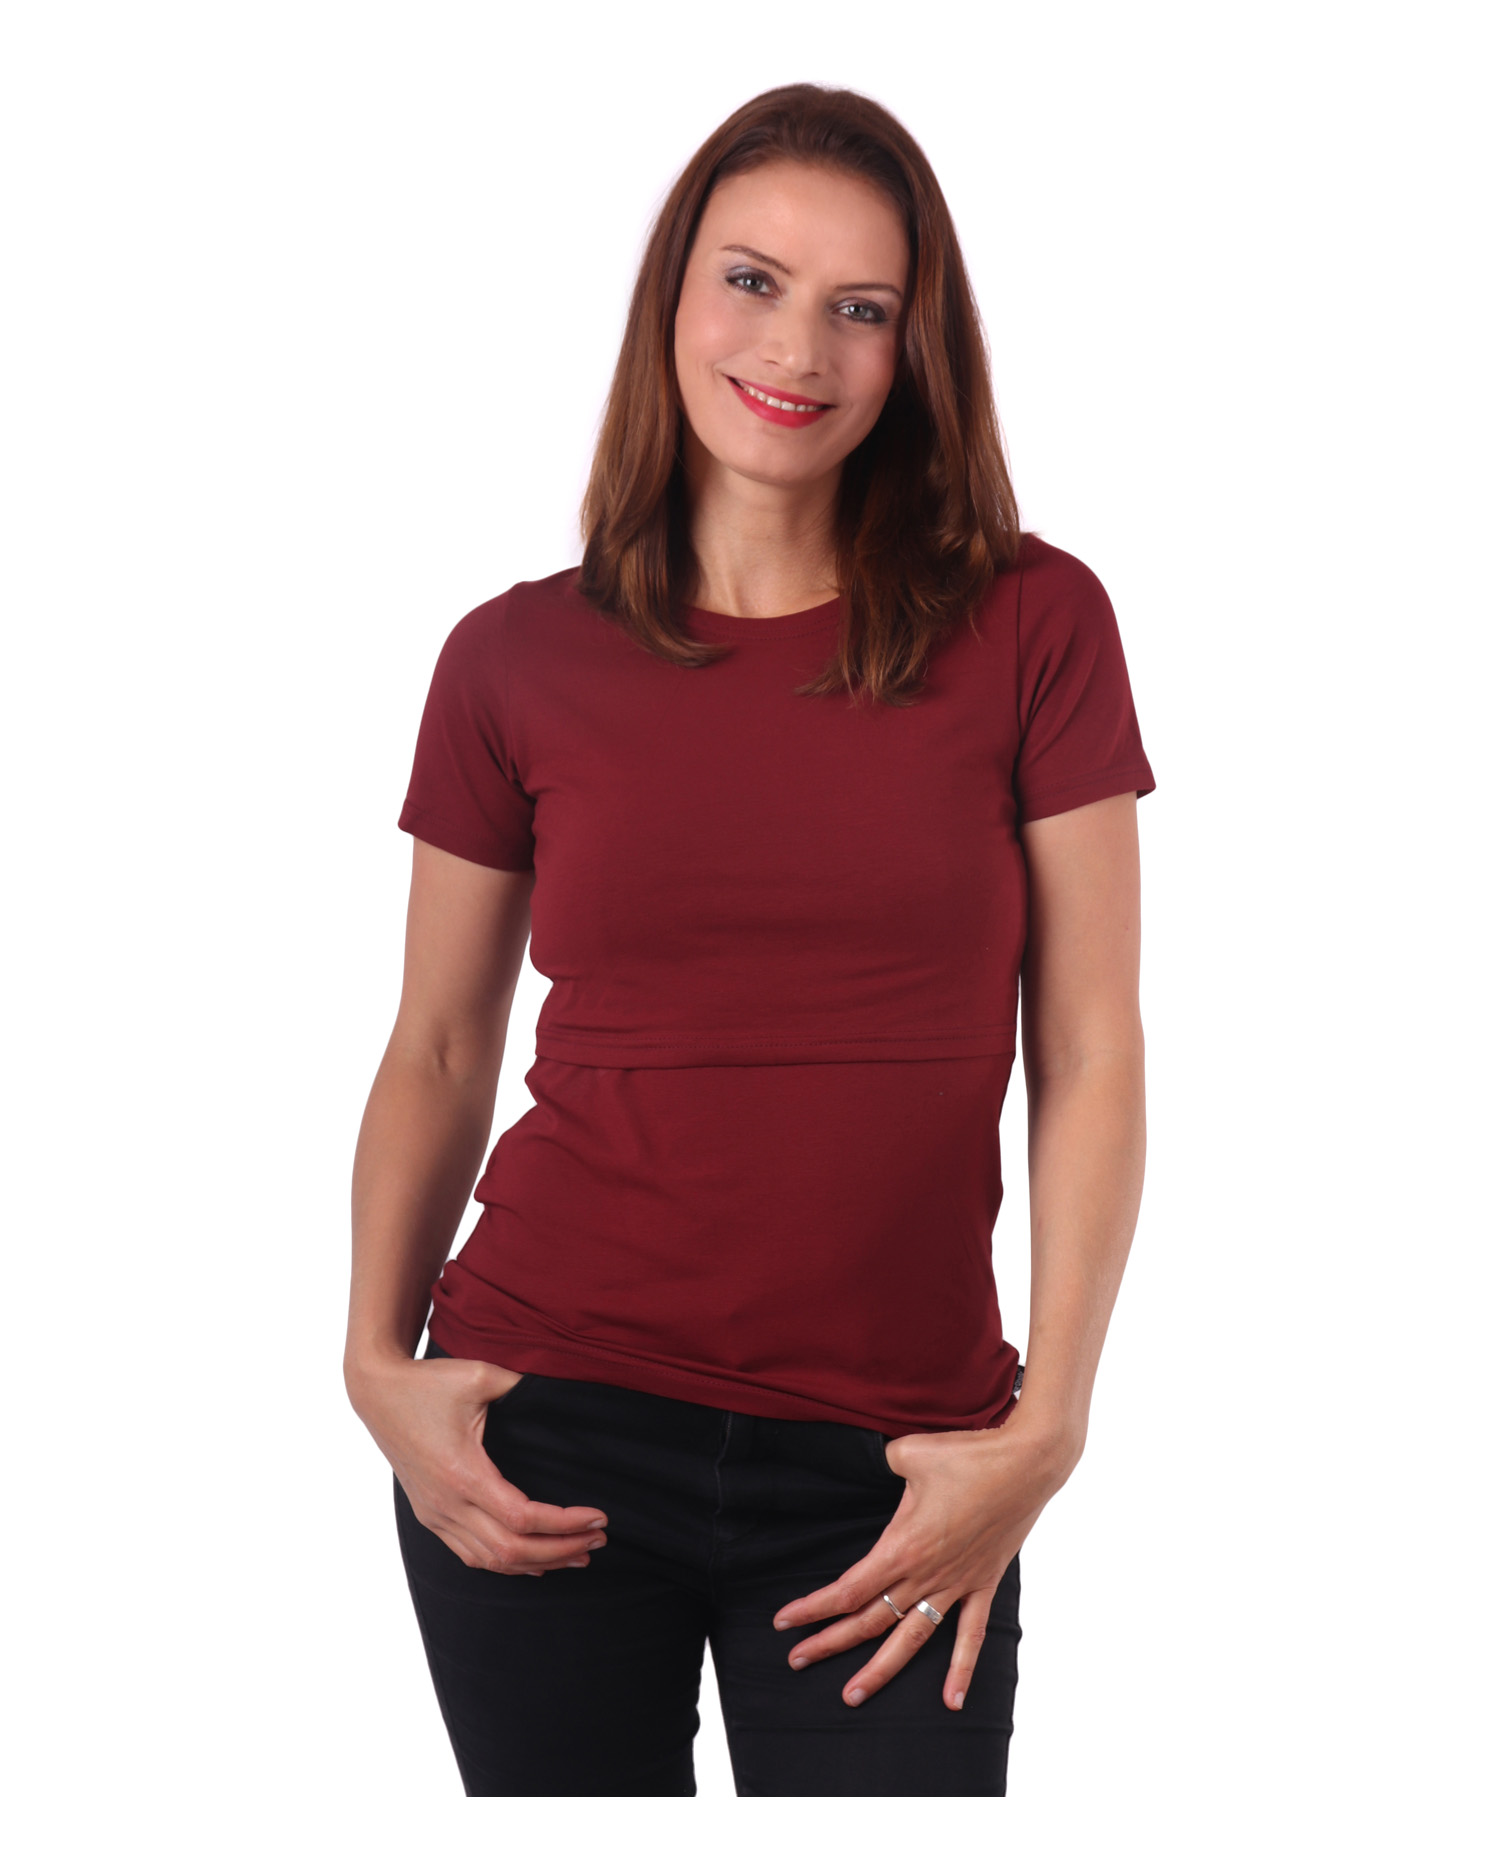 Breast-feeding T-shirt Lena, short sleeves, wine red